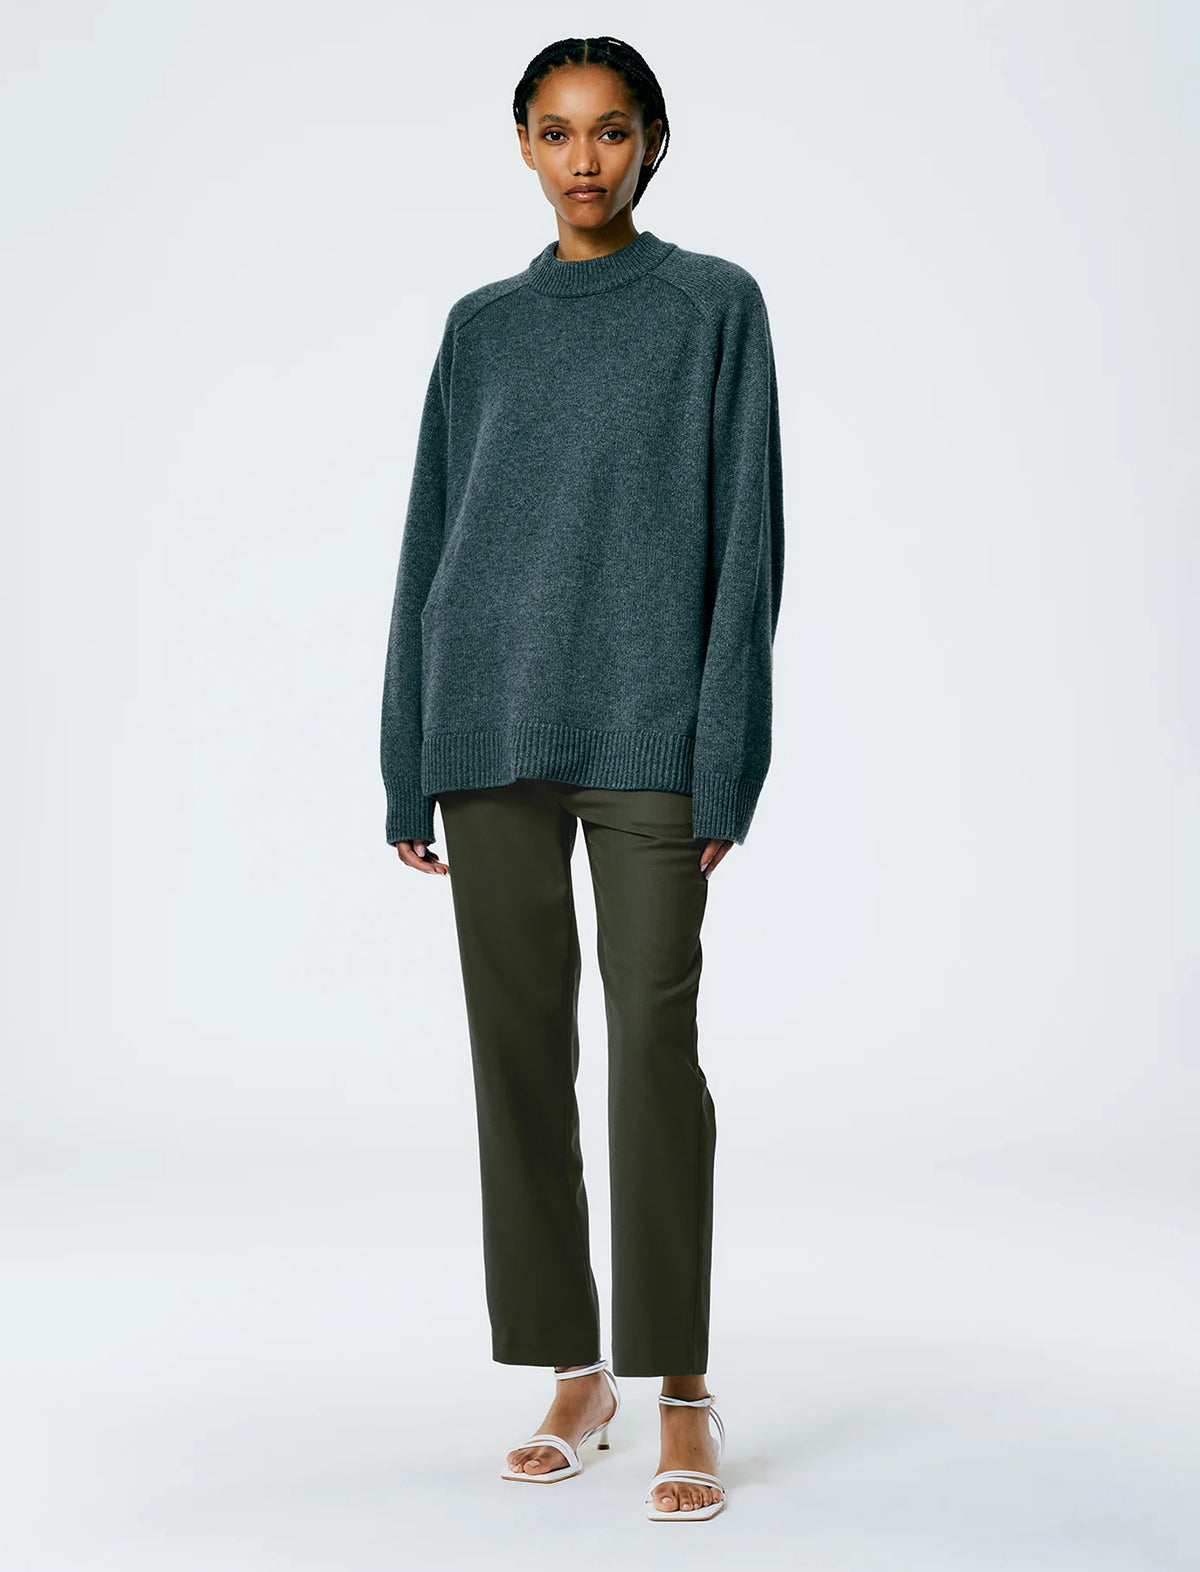 TIBI Cashmere Sweater Oversized Pullover In Dark Heather Grey